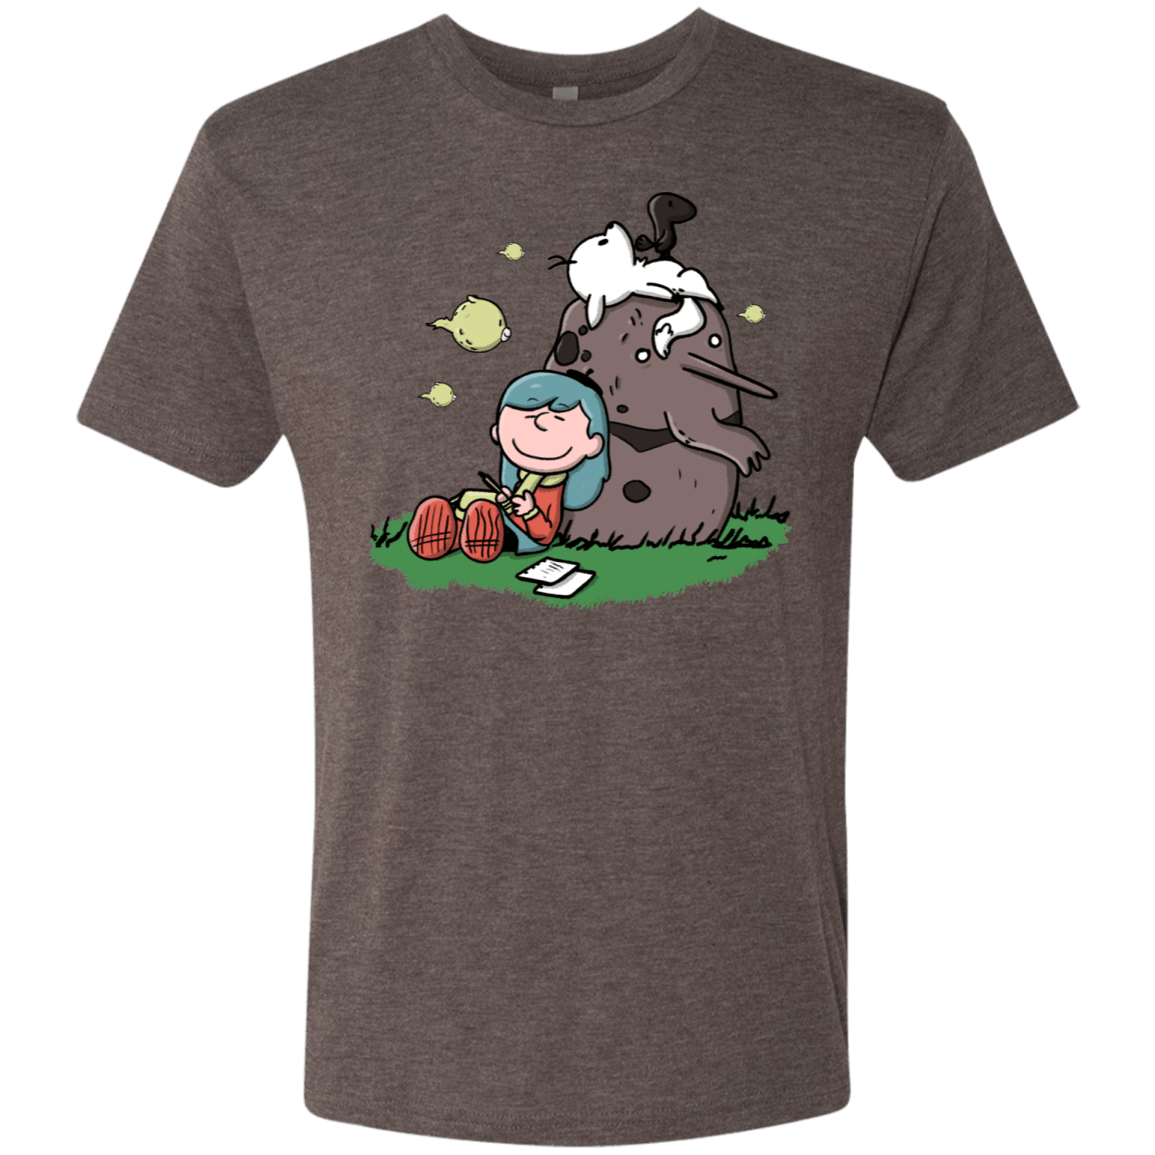 T-Shirts Macchiato / S Hilda Brown Men's Triblend T-Shirt